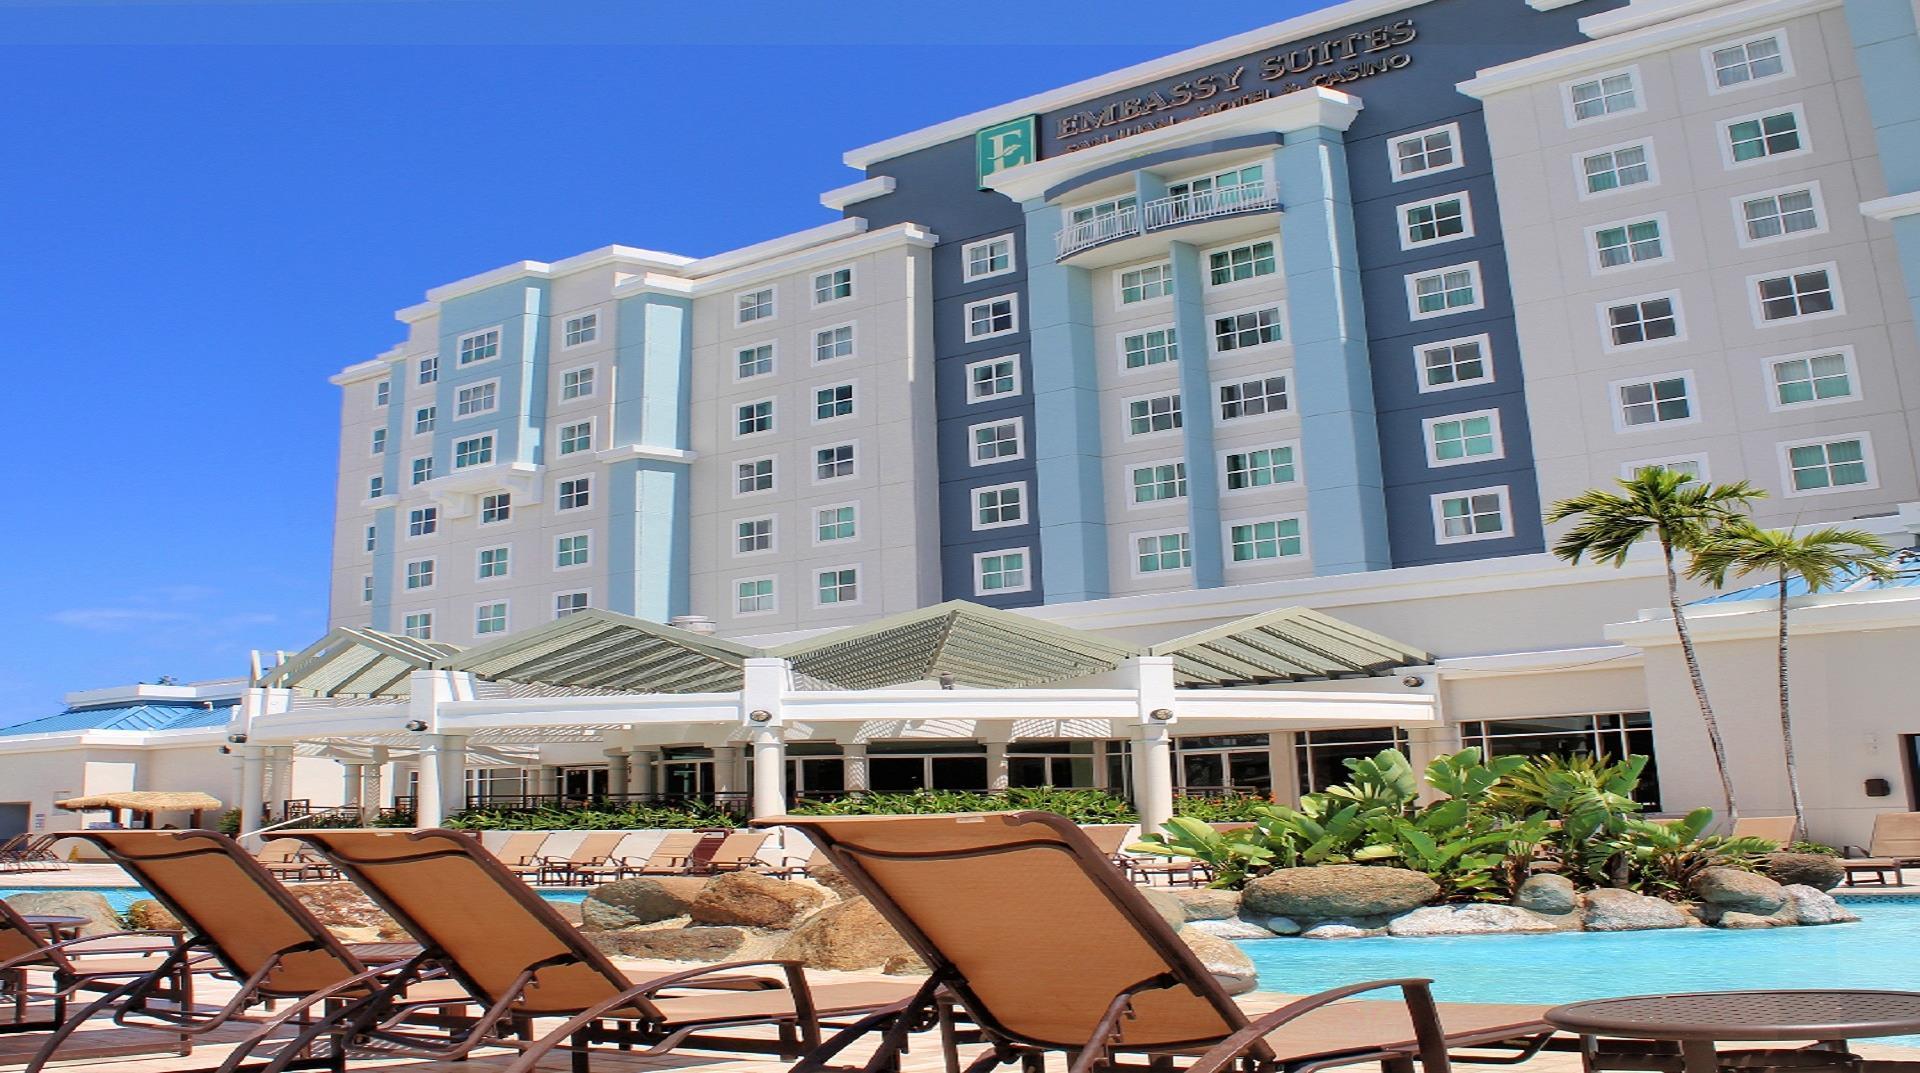 Embassy Suites by Hilton San Juan Hotel & Casino in Carolina - San Juan, PR